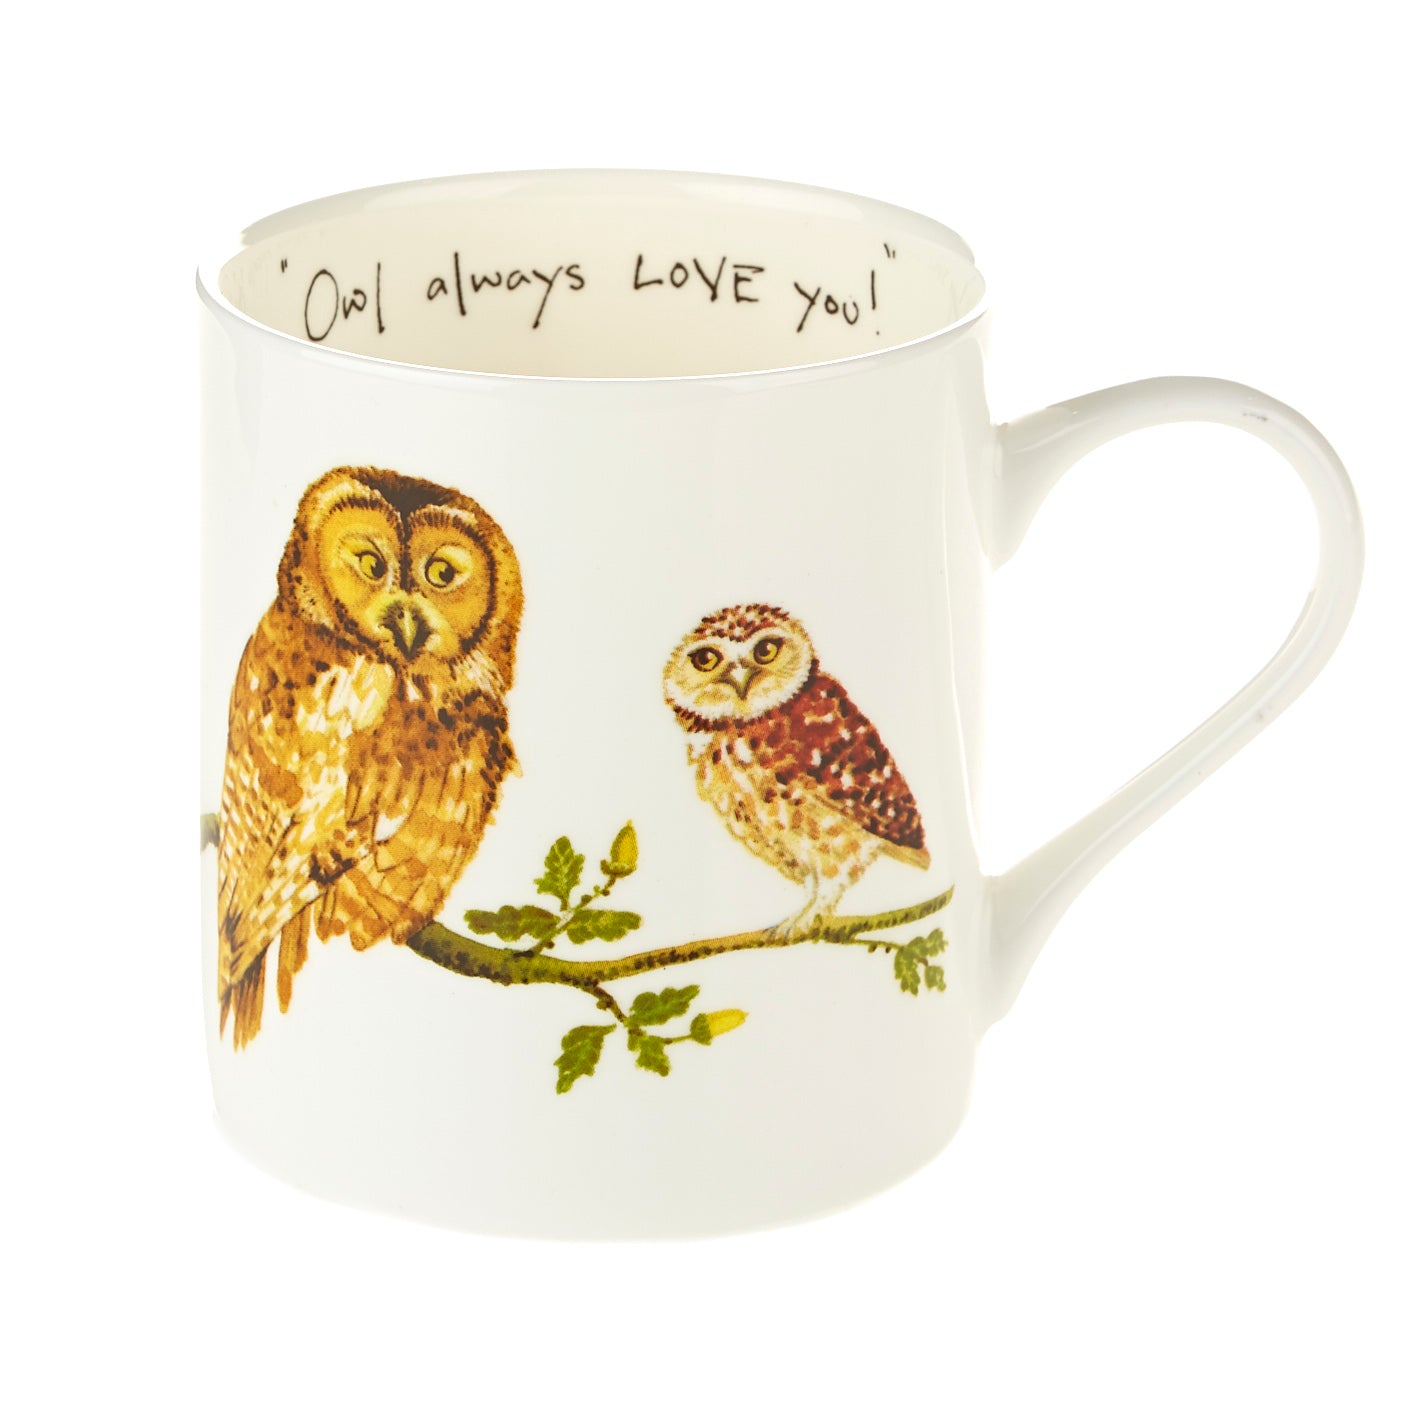 "Owl Always Love You!" Mug